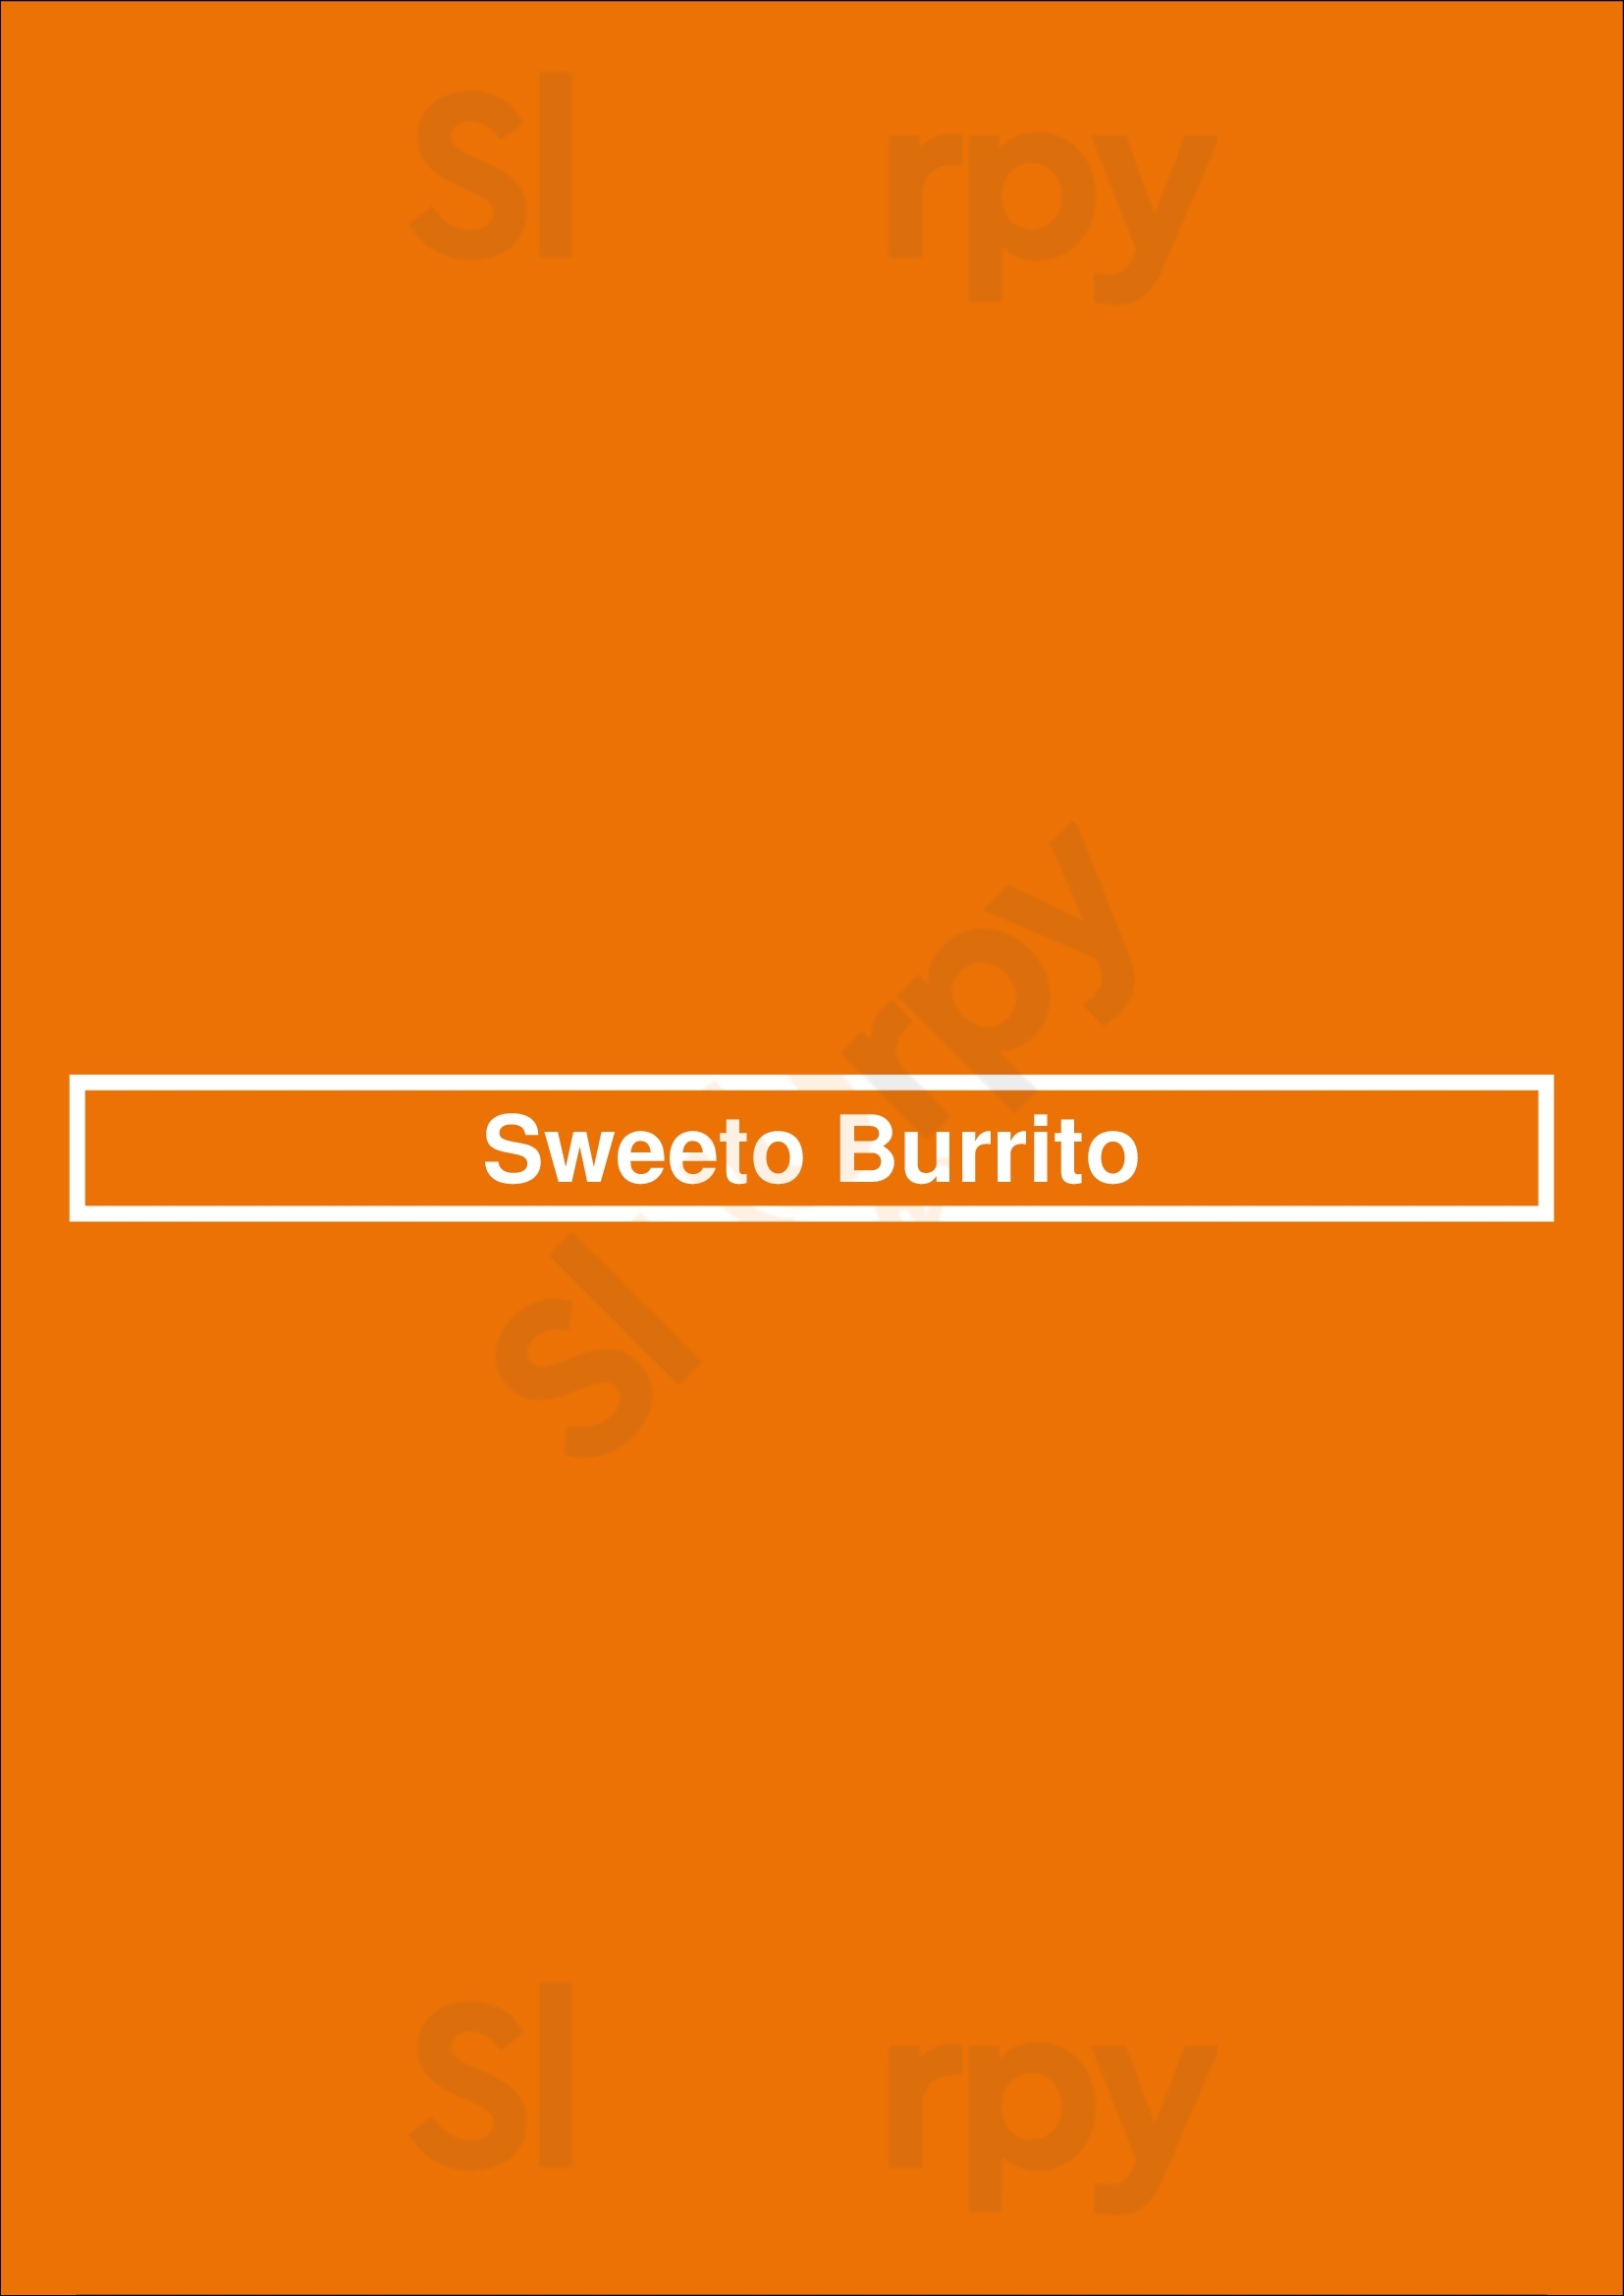 Sweeto Burrito Woodbridge Menu - 1